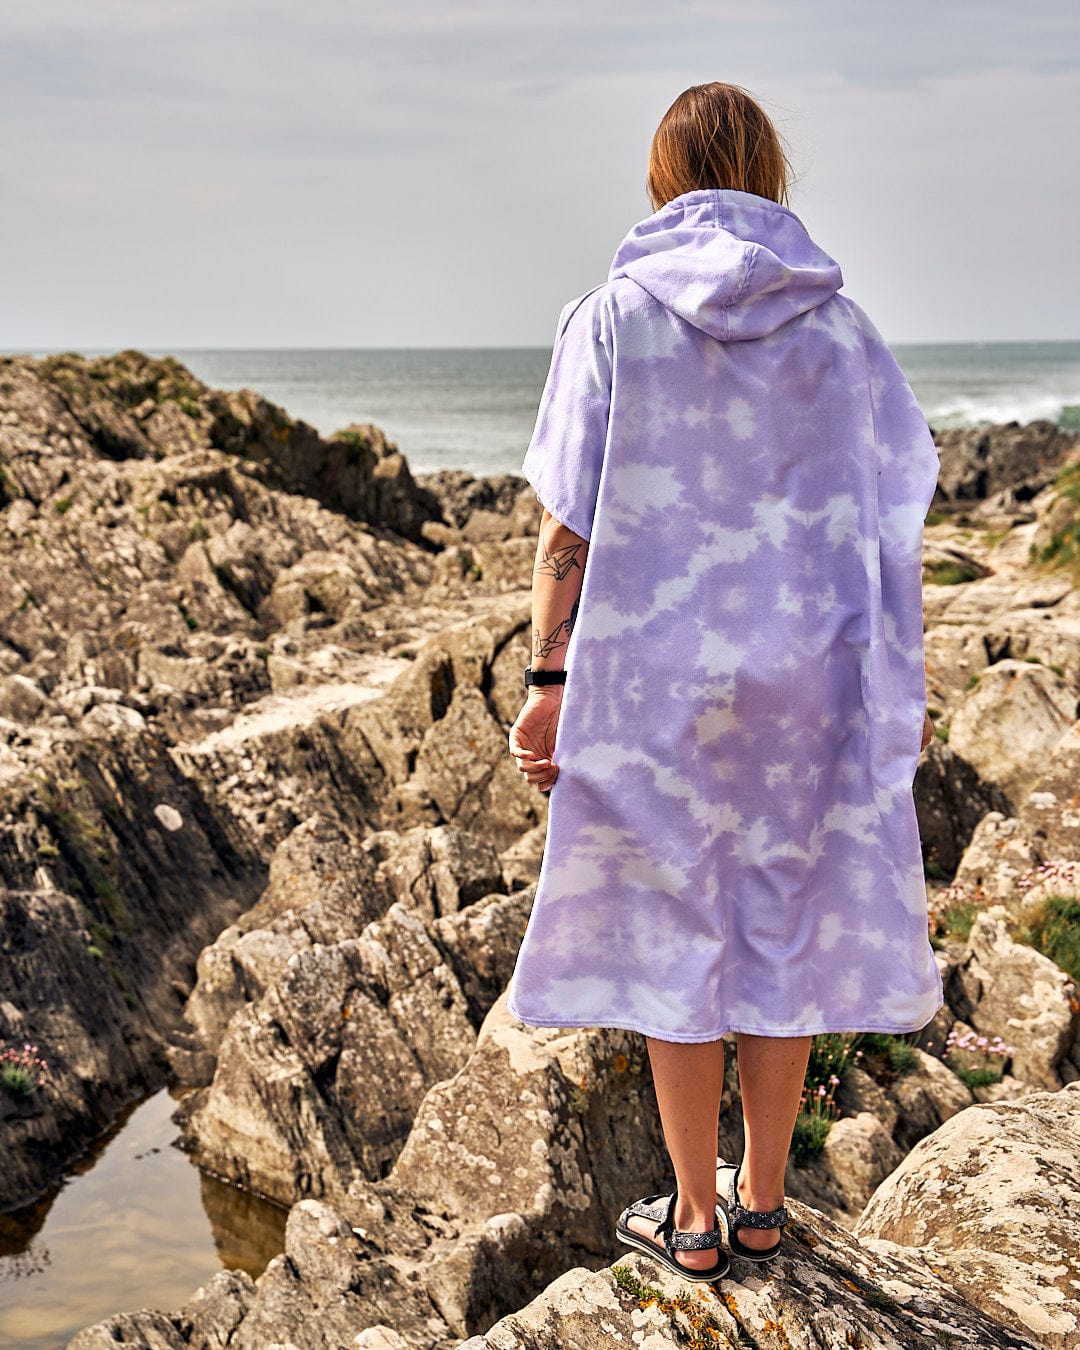 A woman wearing a Saltrock Ubud - Womens Tie Dye Changing Towel - Light Purple poncho standing on a rocky beach.